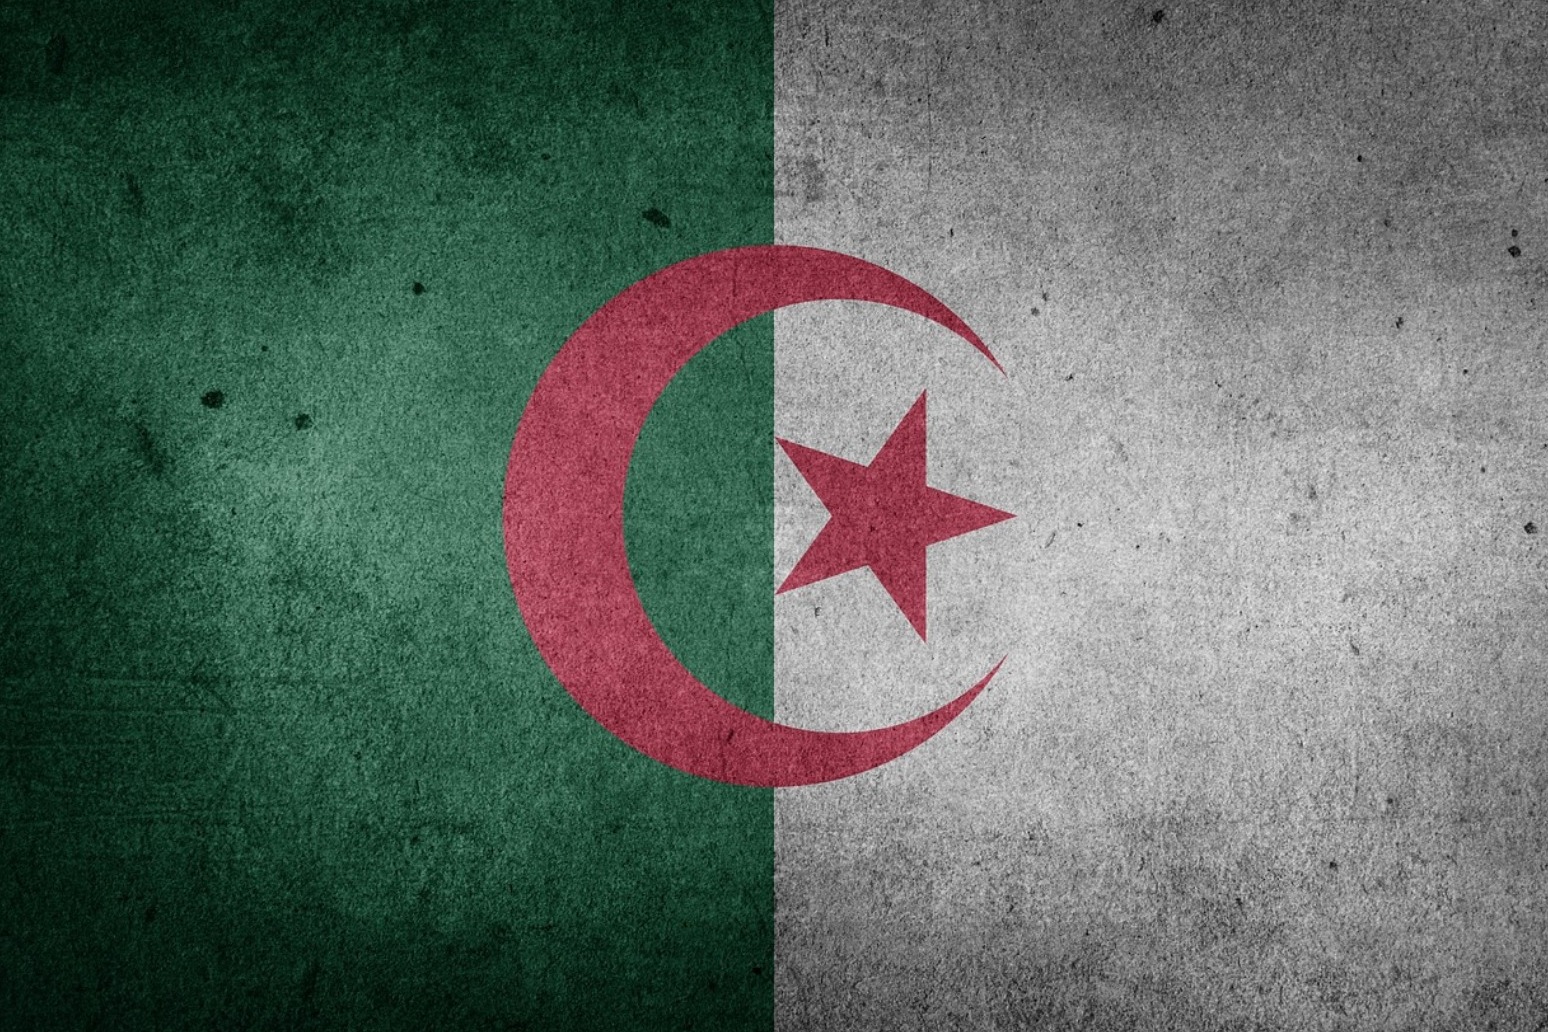 More than 200 feared dead in Algerian military plane crash 